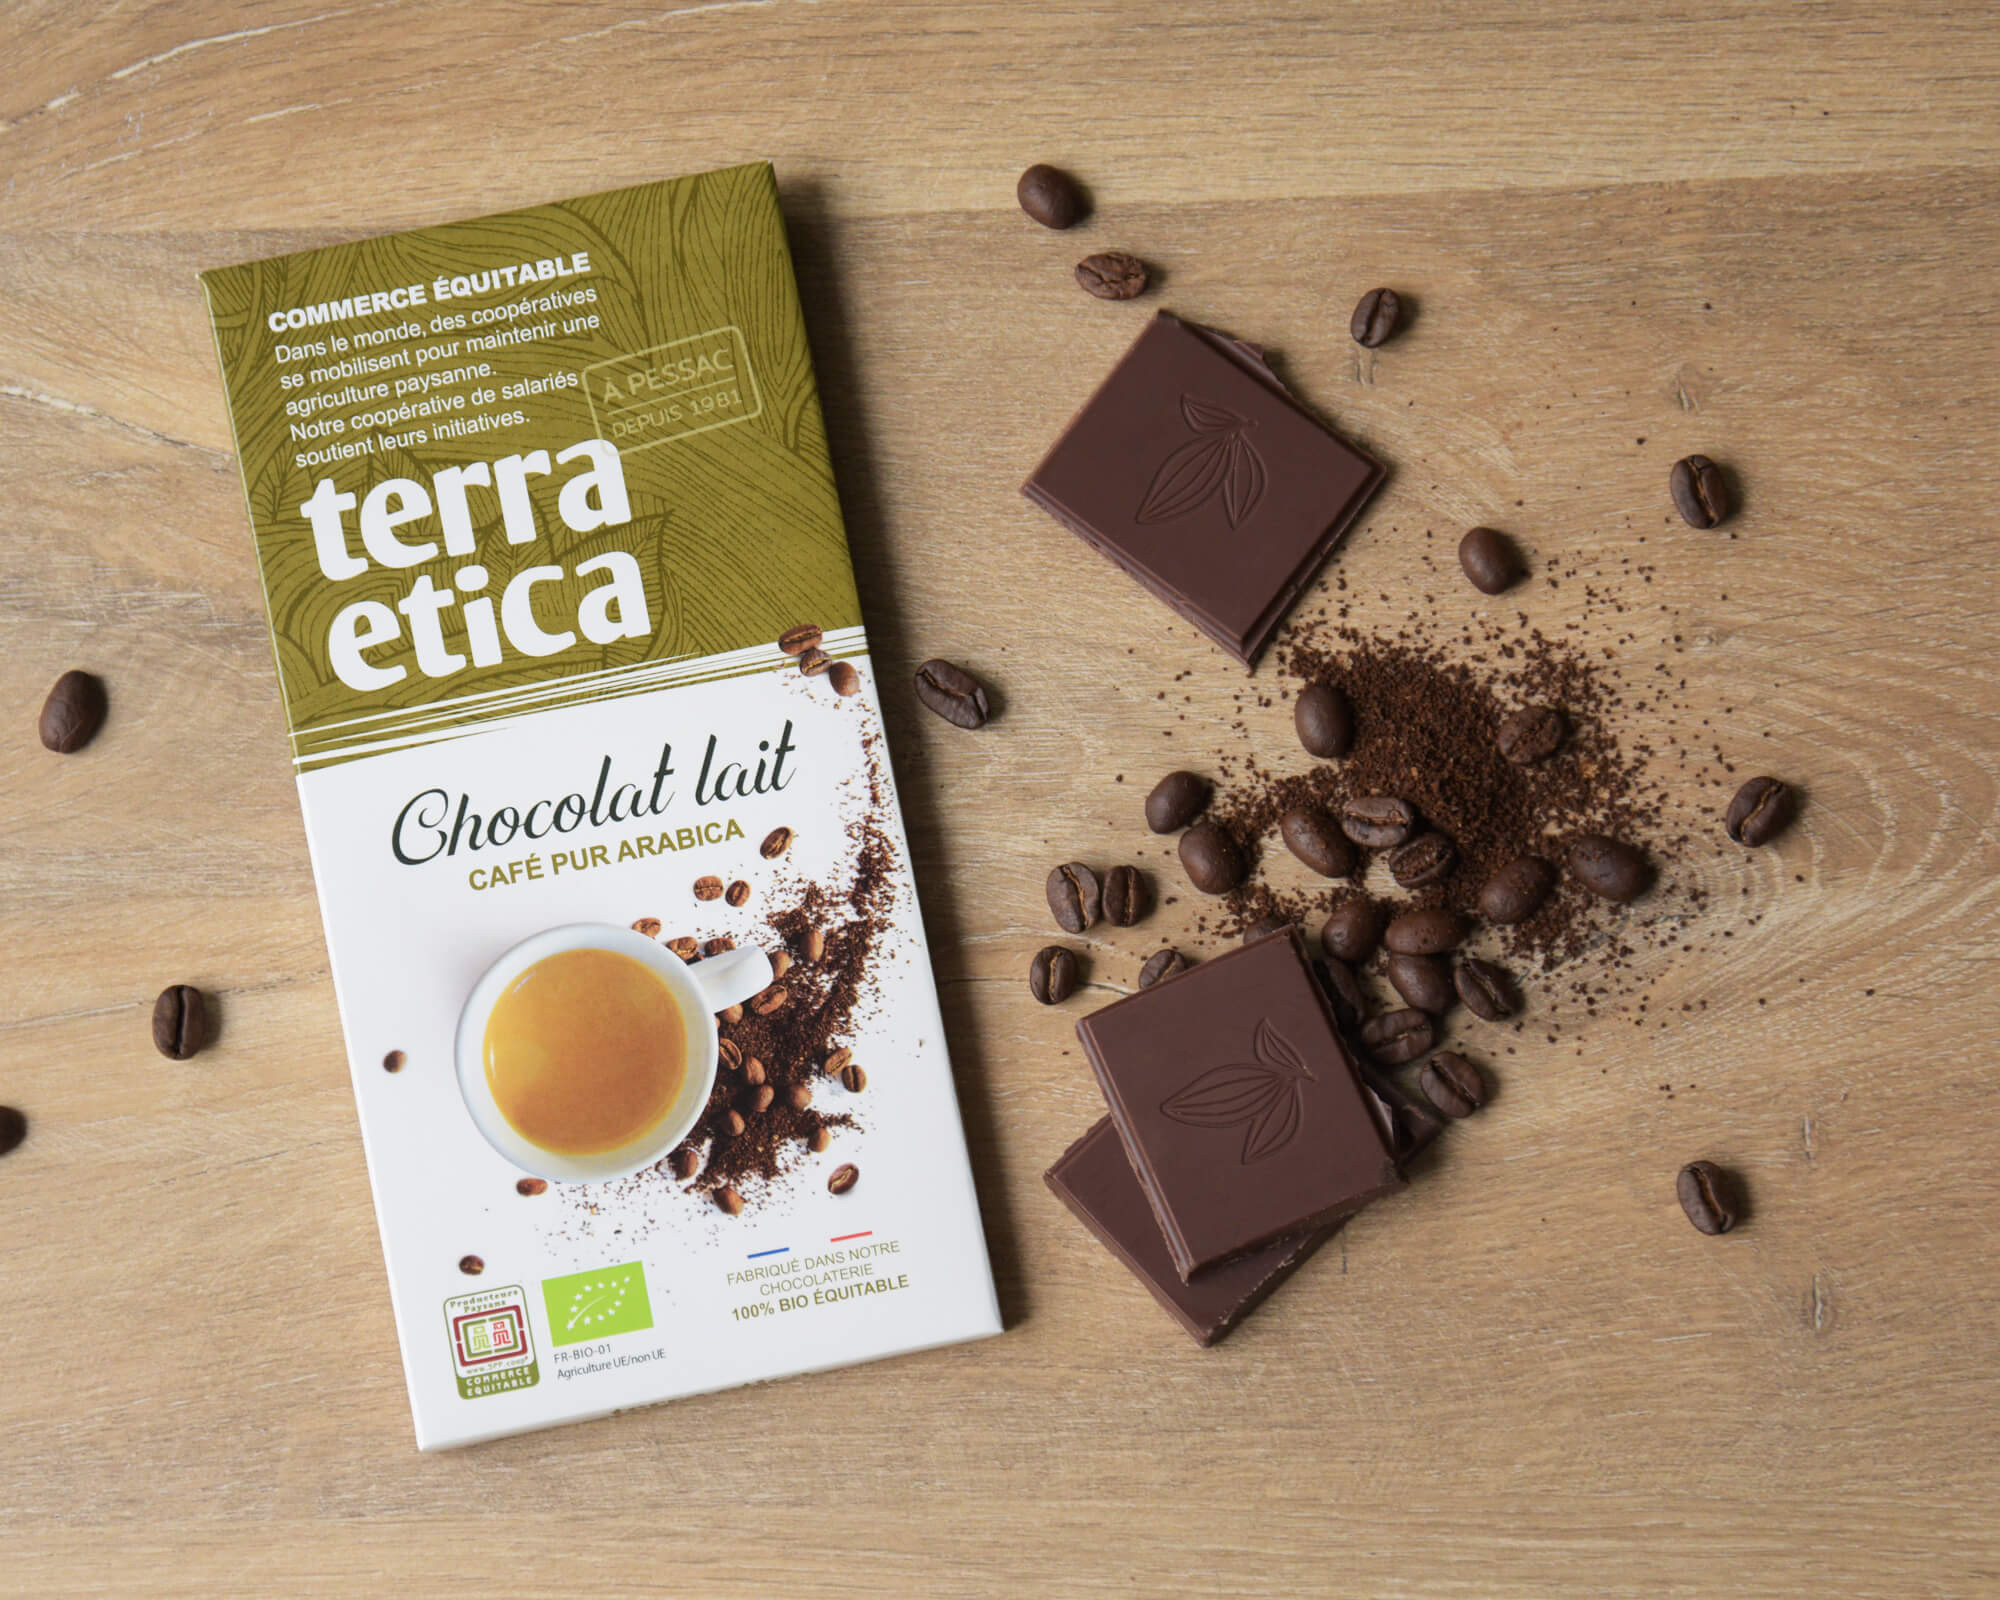 Chocolat lait café arabica 47% cacao Pérou I Terra Etica